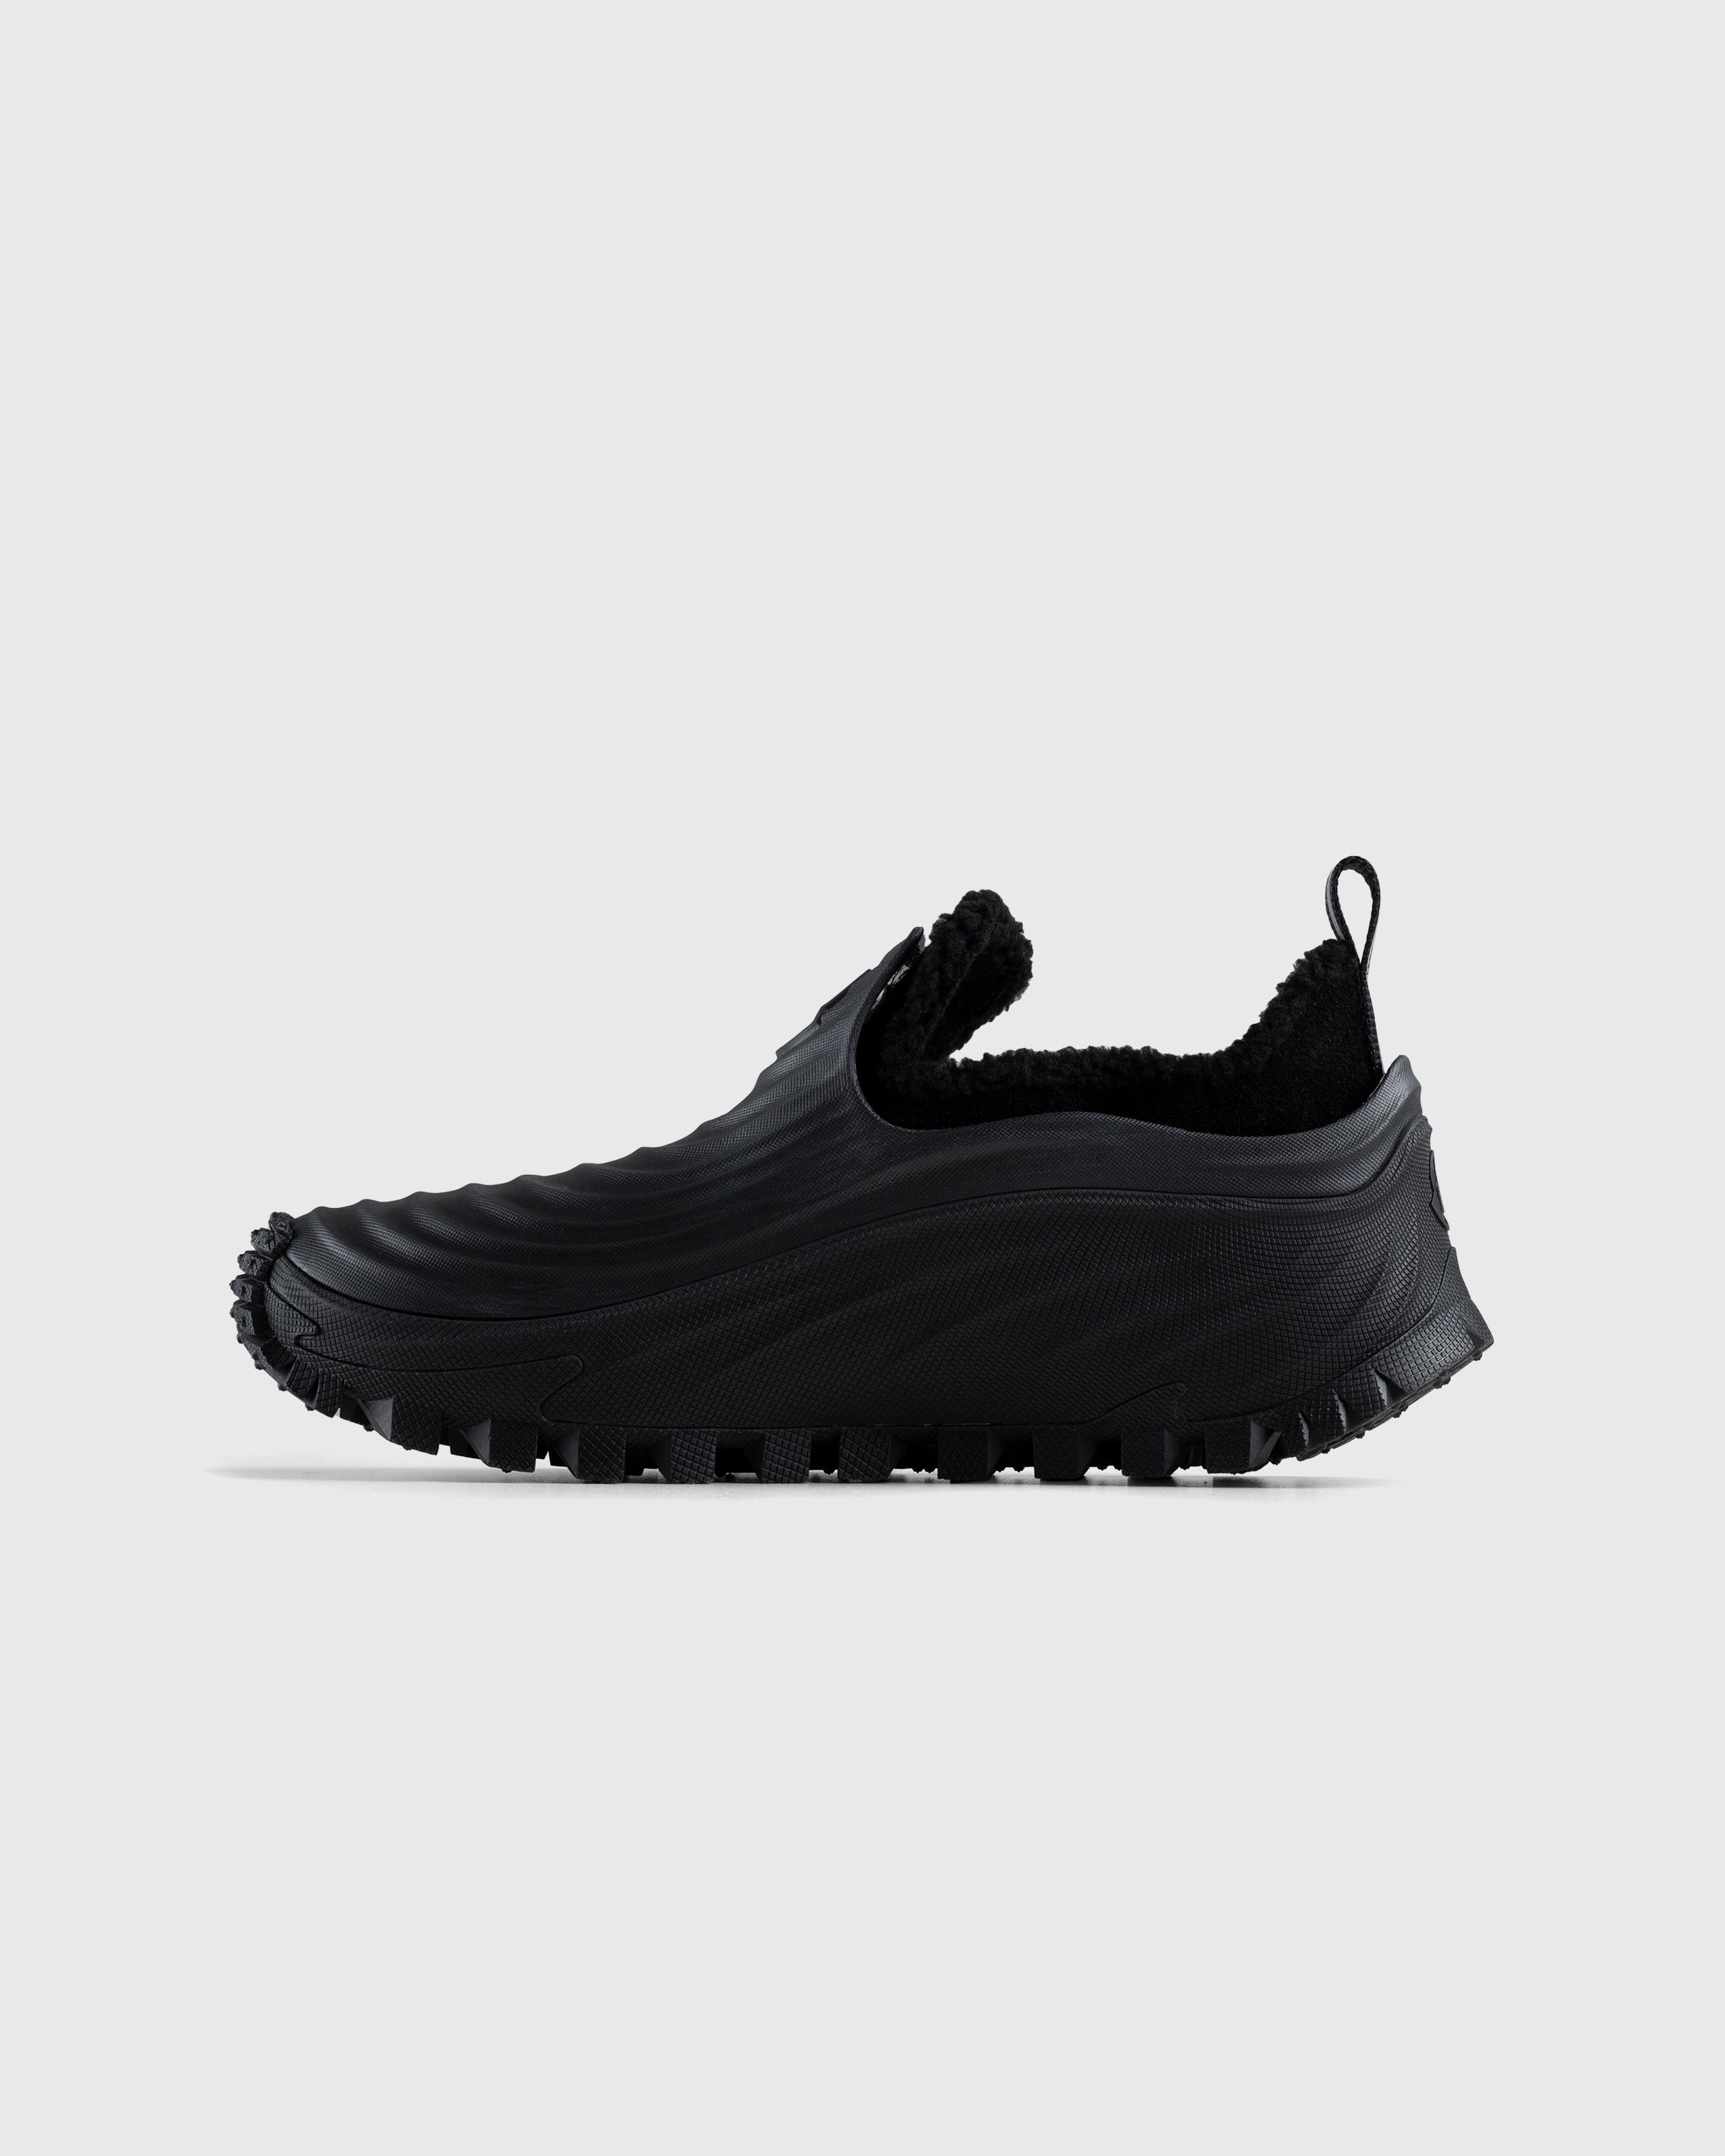 Moncler - Aqua Rain Boots Black - Footwear - Brown - Image 2